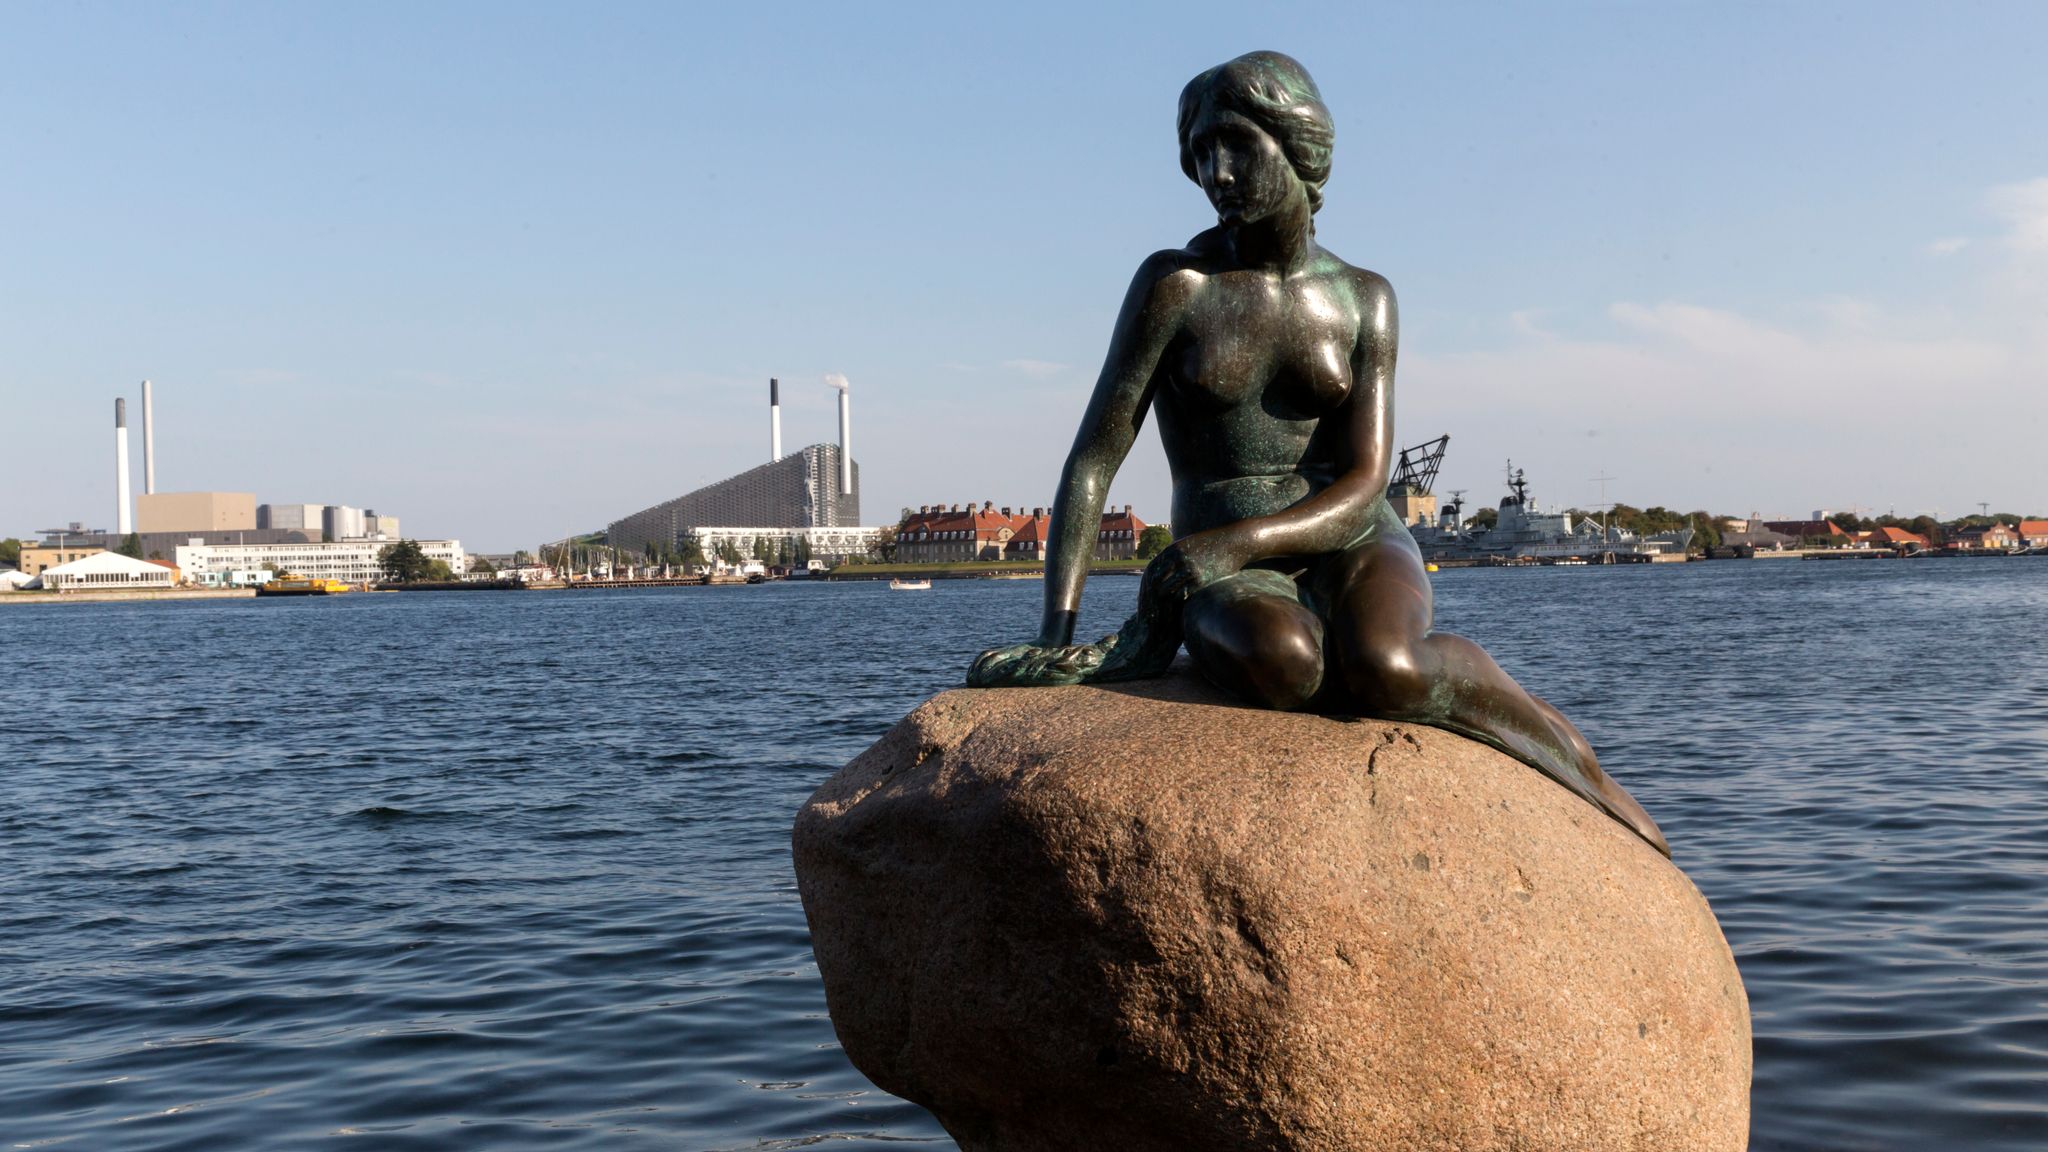 Hans Christian Andersen's Little Mermaid statue vandalised with 'racist fish' graffiti | World News | Sky News